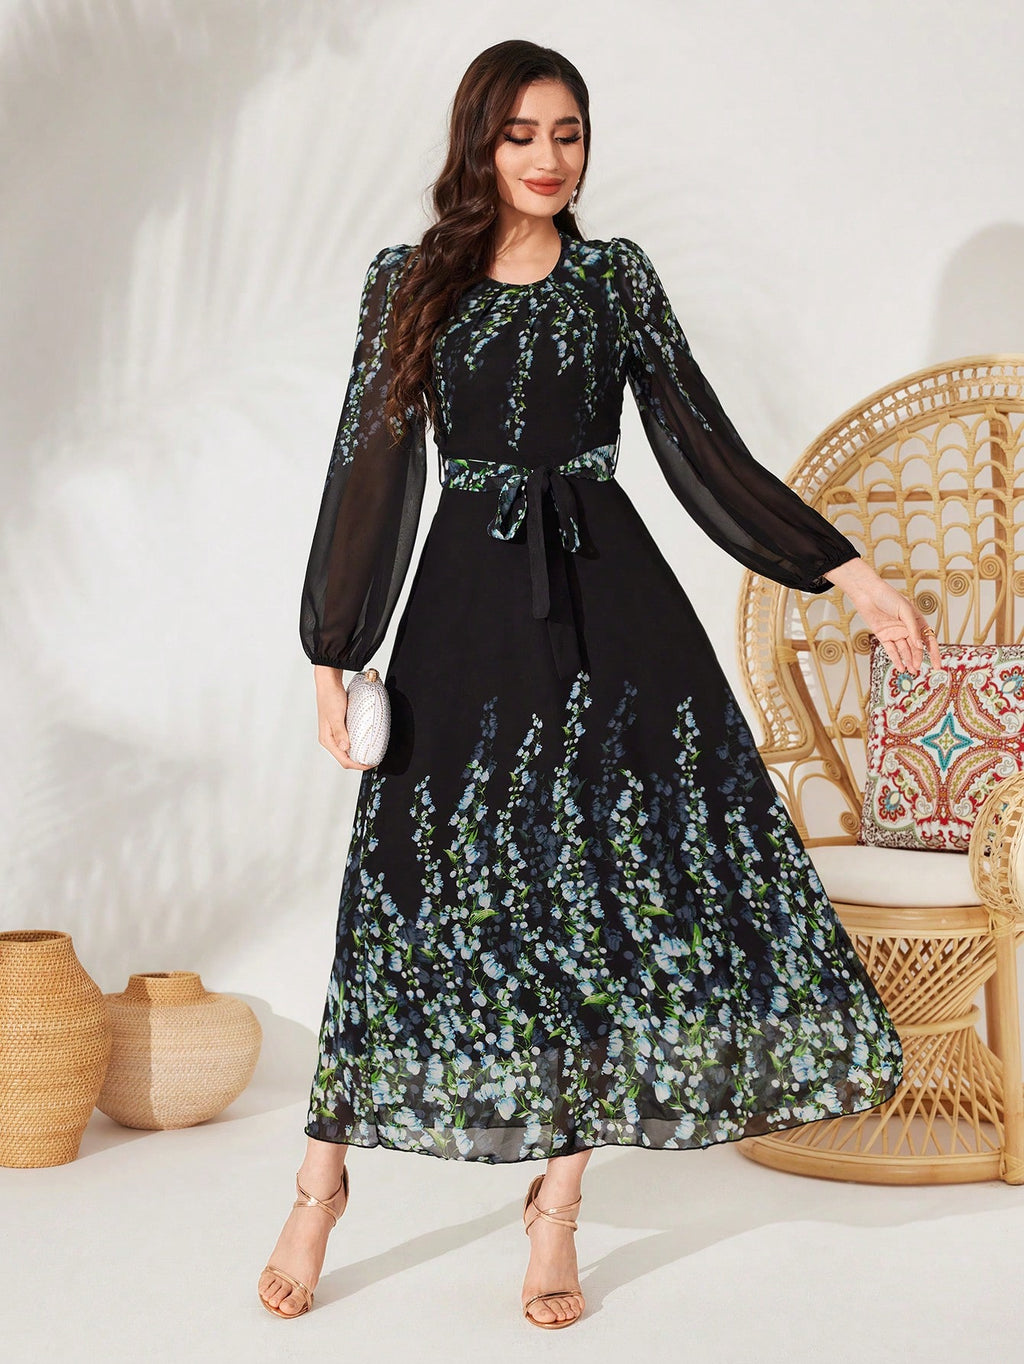 SHEIN Modely Women's Floral Print Lantern Sleeve Dress